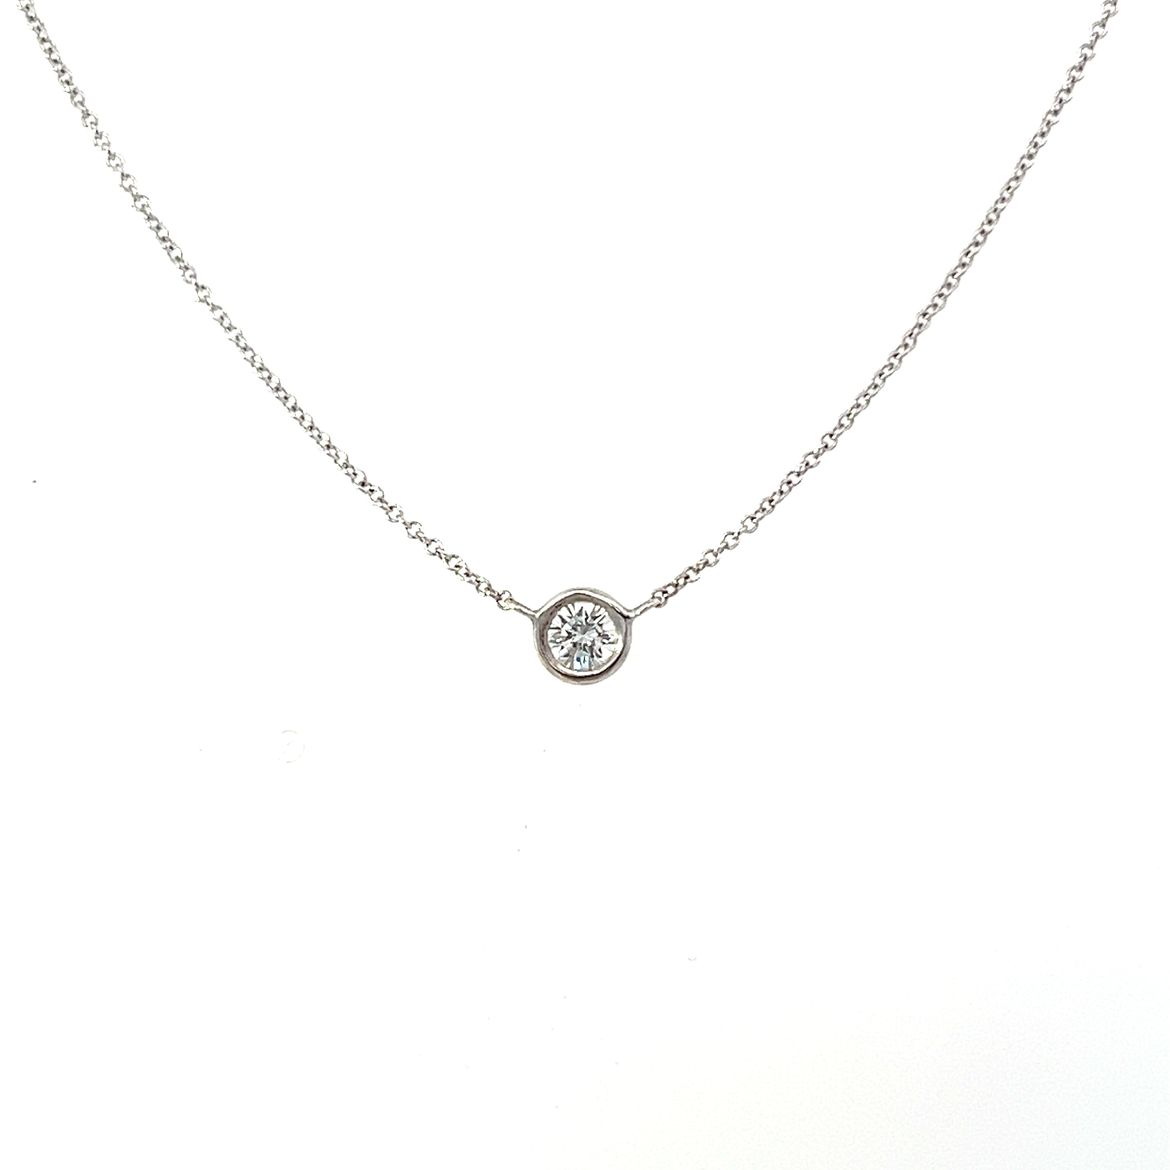 A modern round brilliant 0.45ct diamond pendant